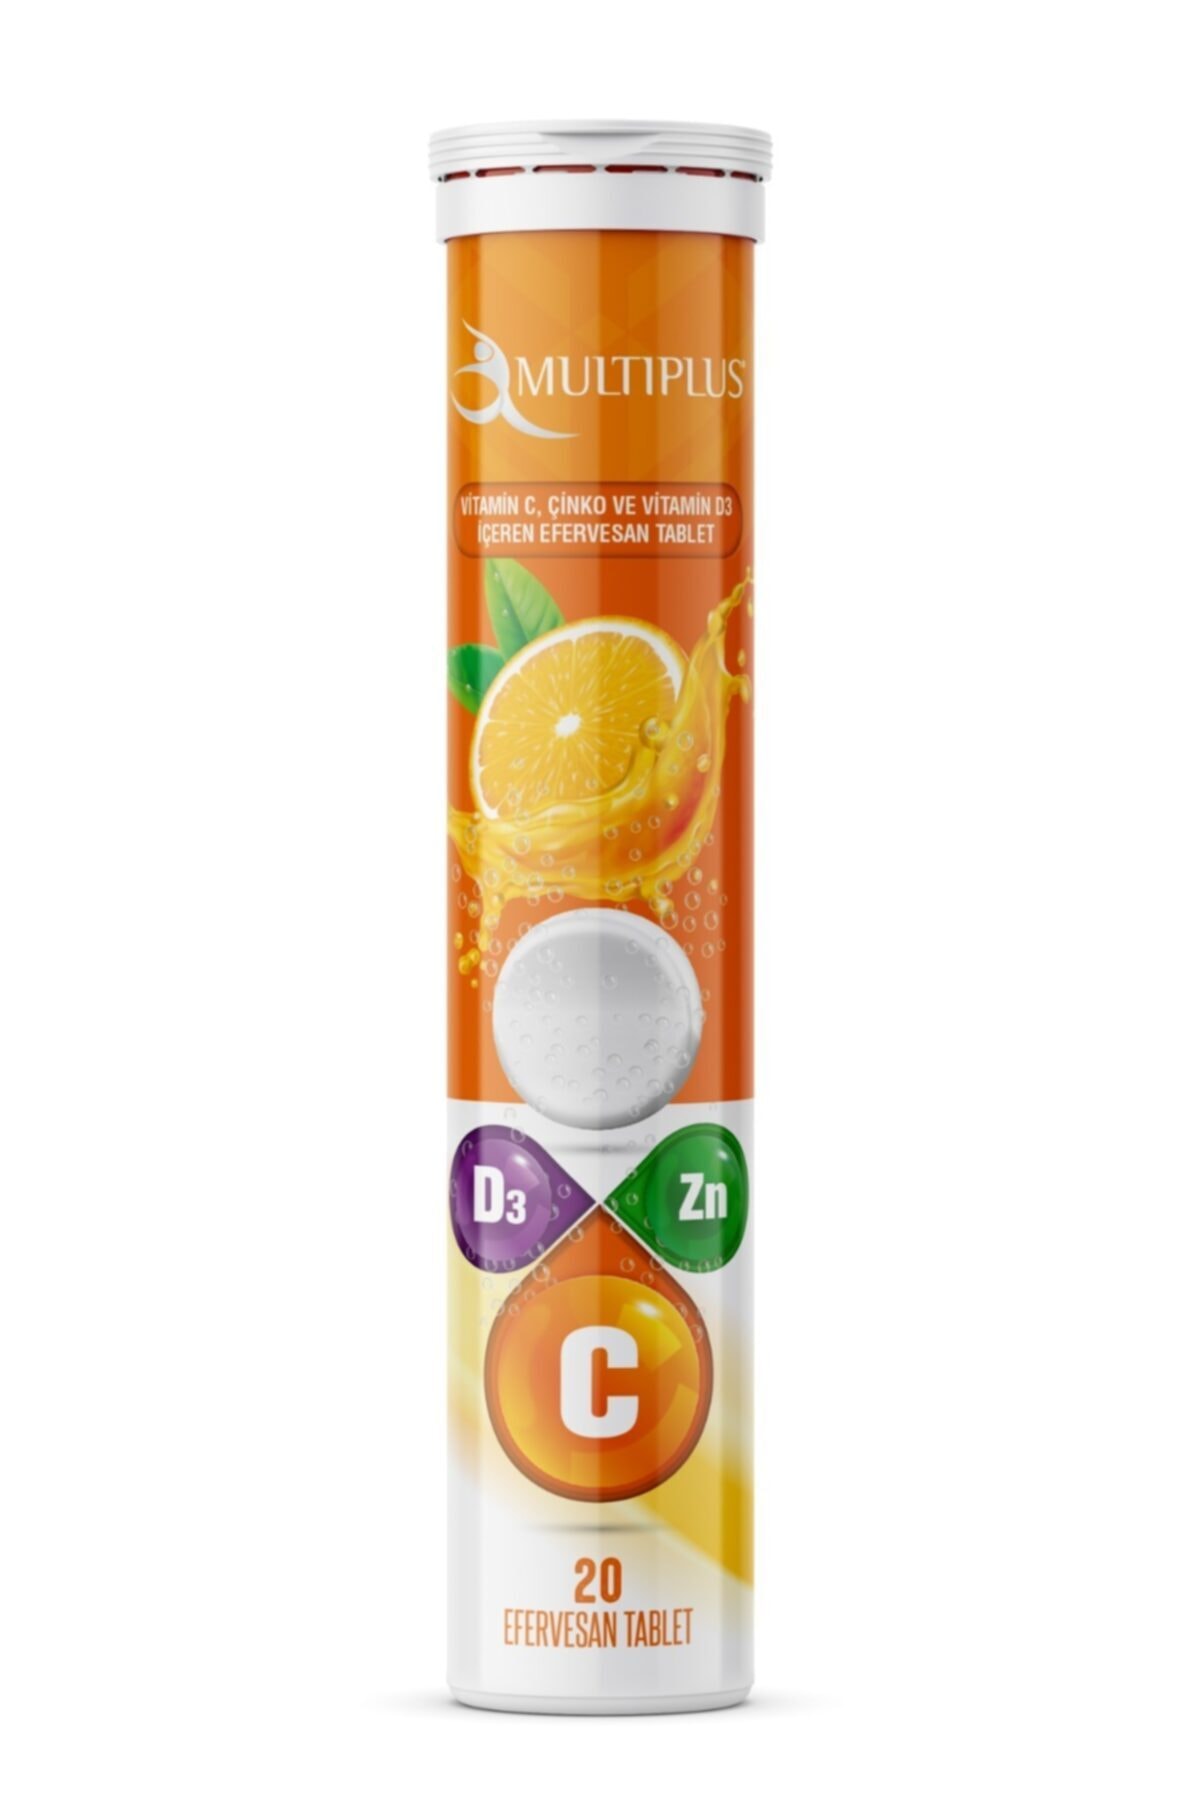 Multiplus Vitamin C , Çinko Ve Vitamin D3 Içeren Efervesan Tablet